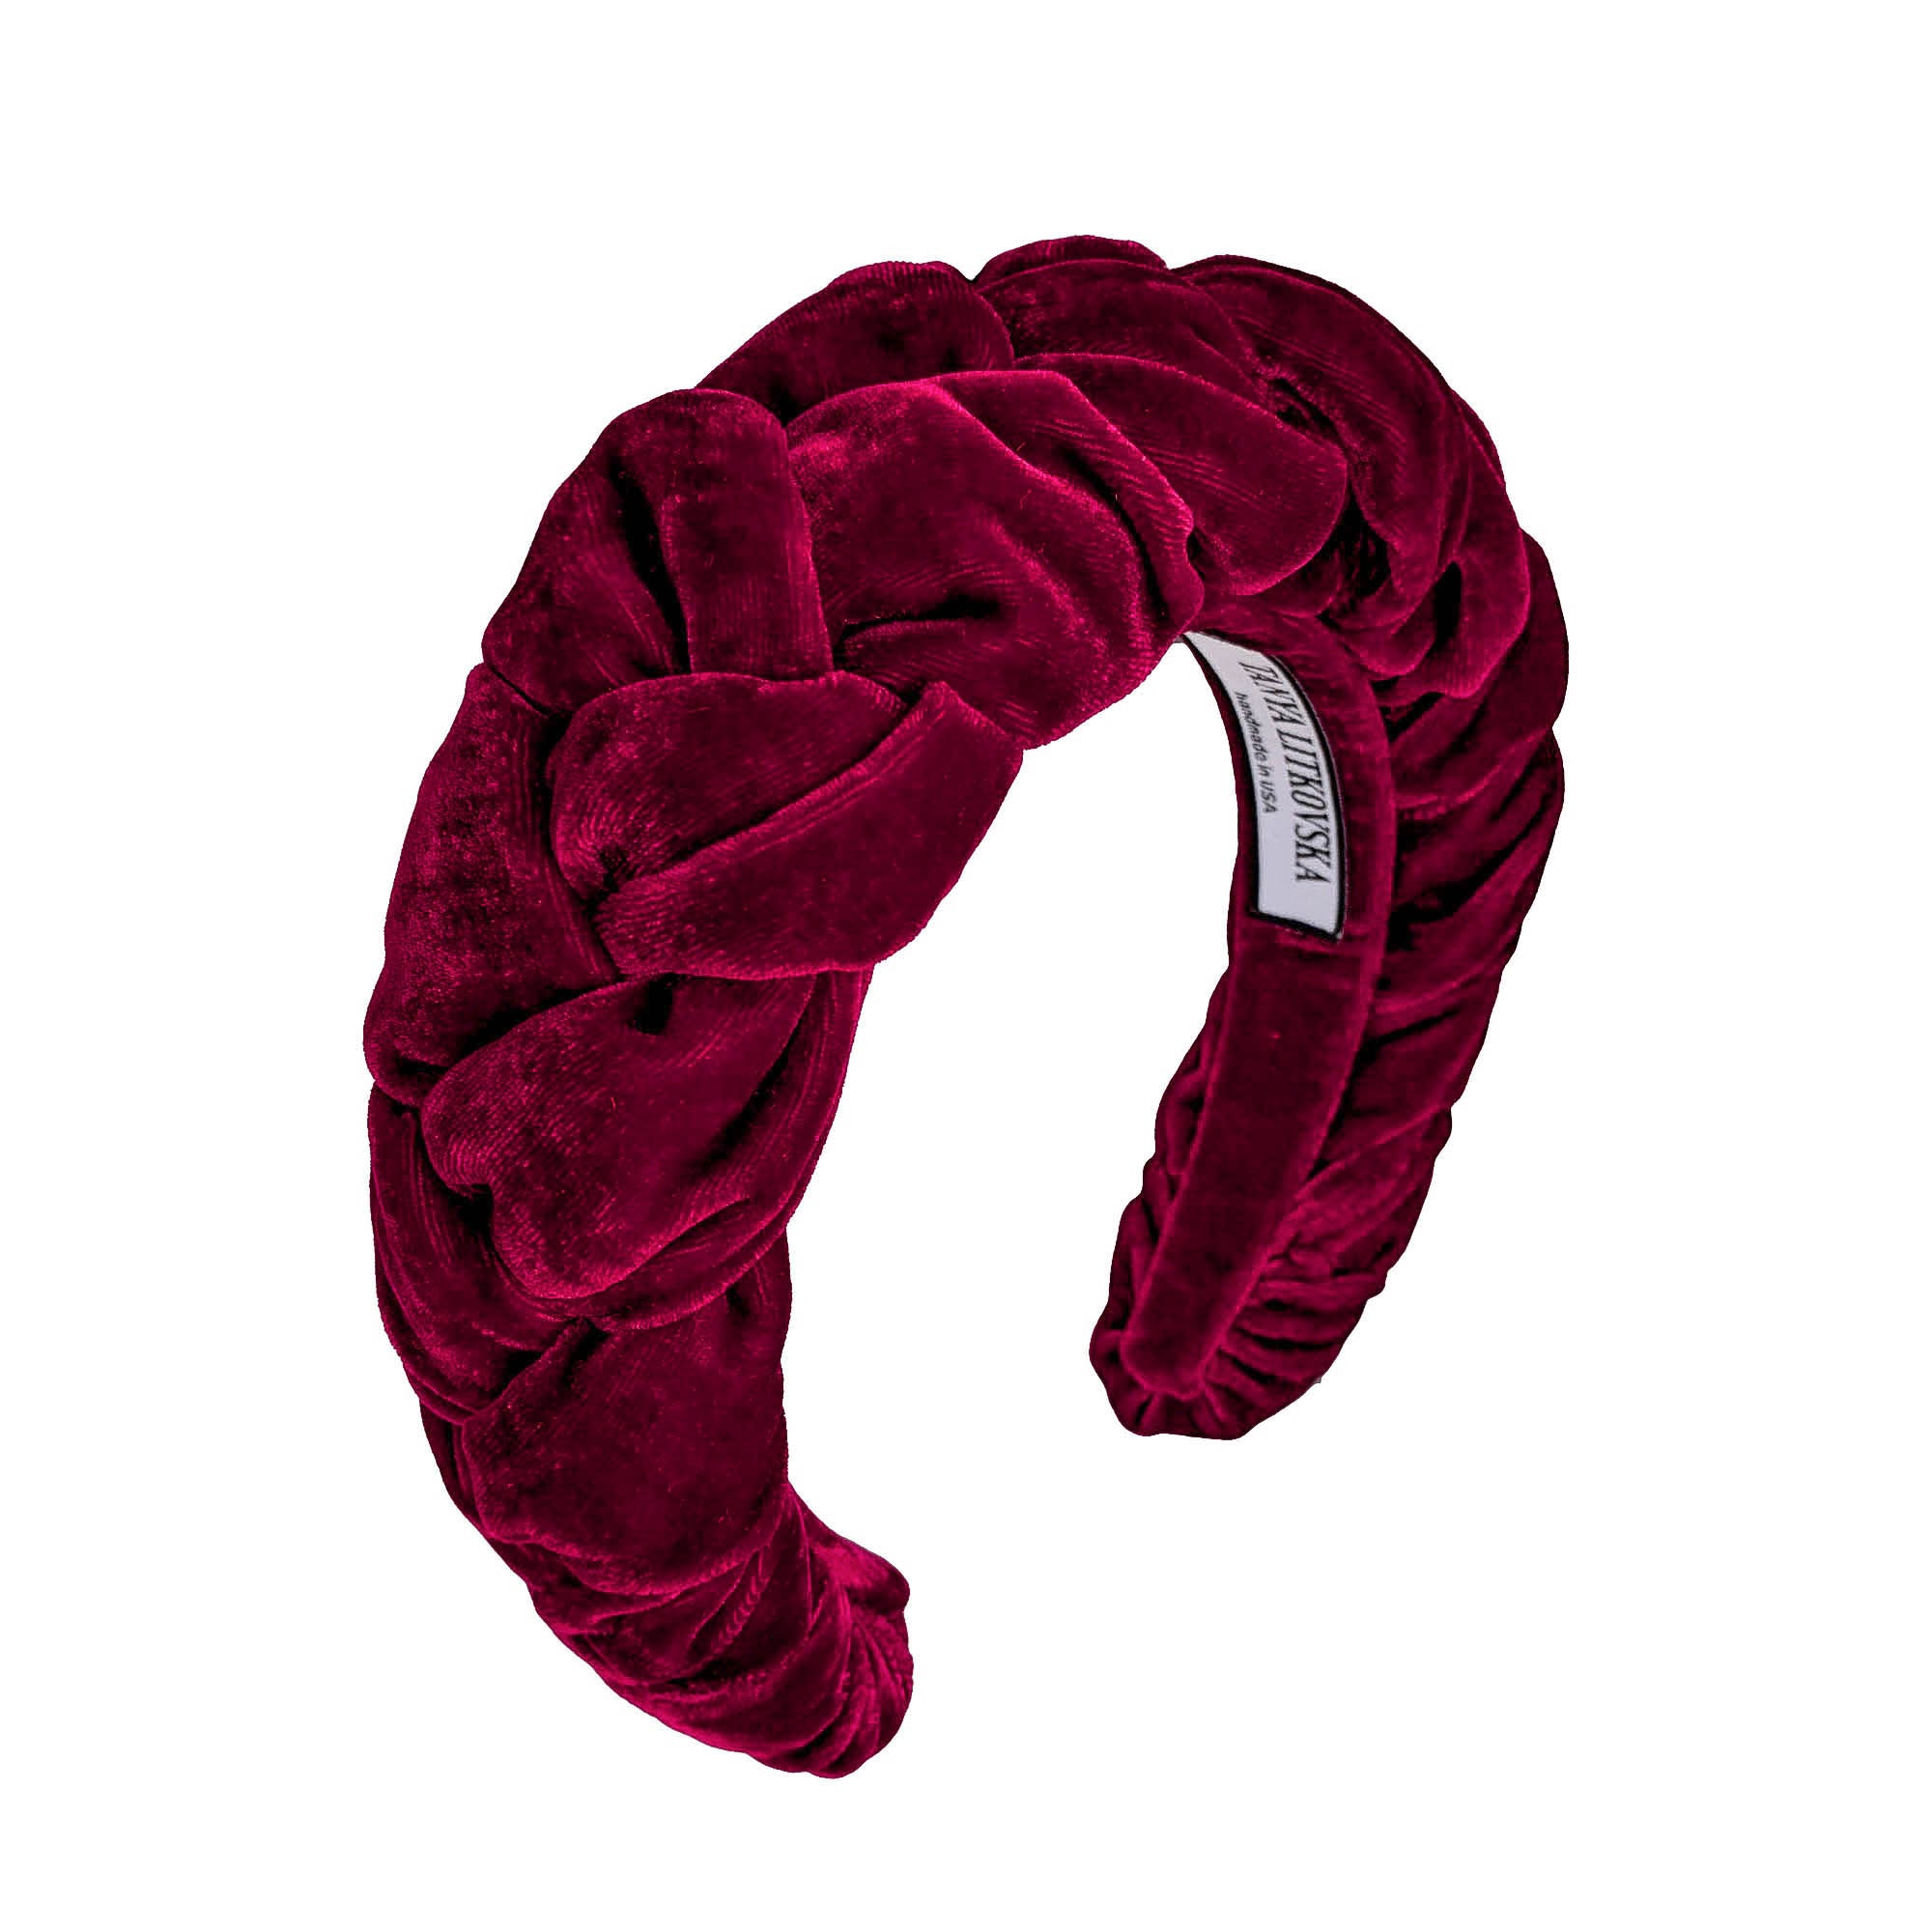 red velvet headband | wide headbands and statement hair accessories by tanya litkovska